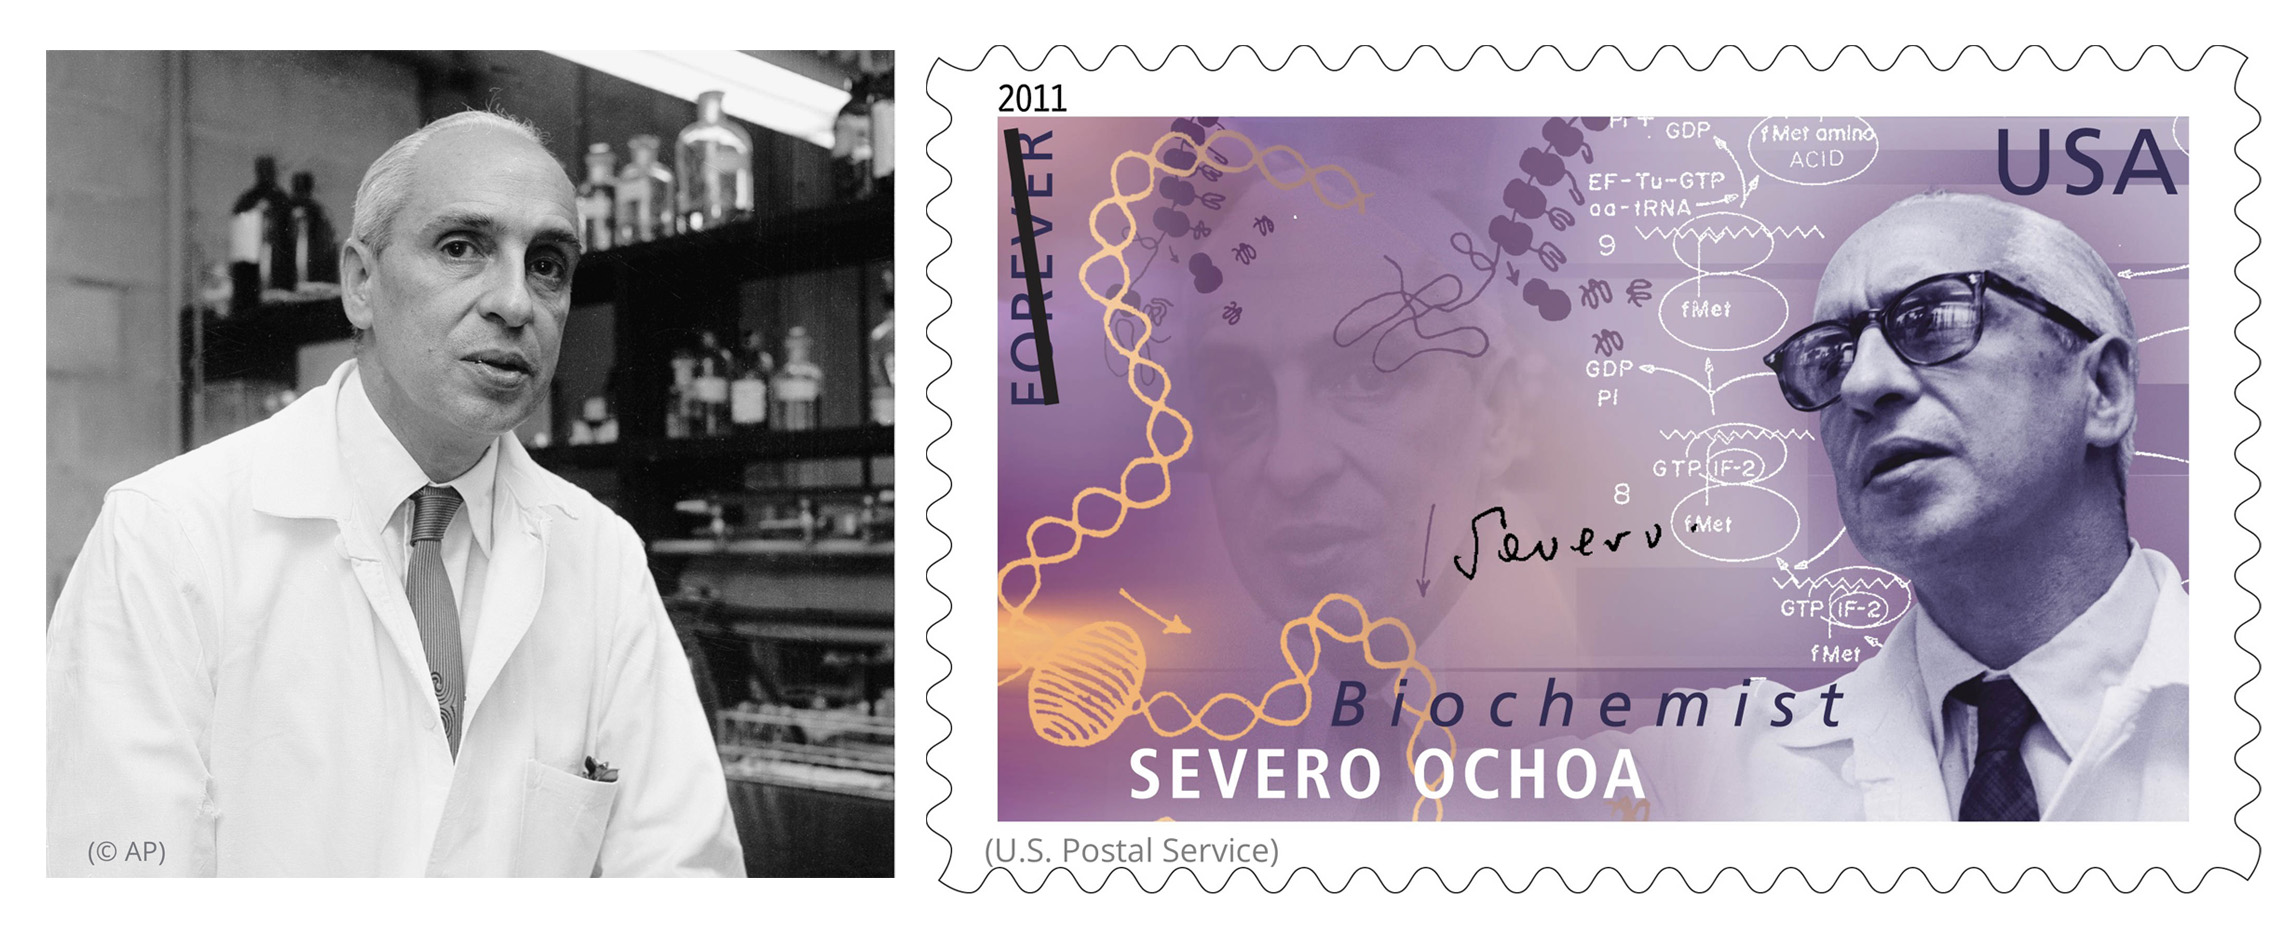 Left photo: Man wearing lab coat (© AP) Right image: Severo Ochoa stamp (U.S. Postal Service)